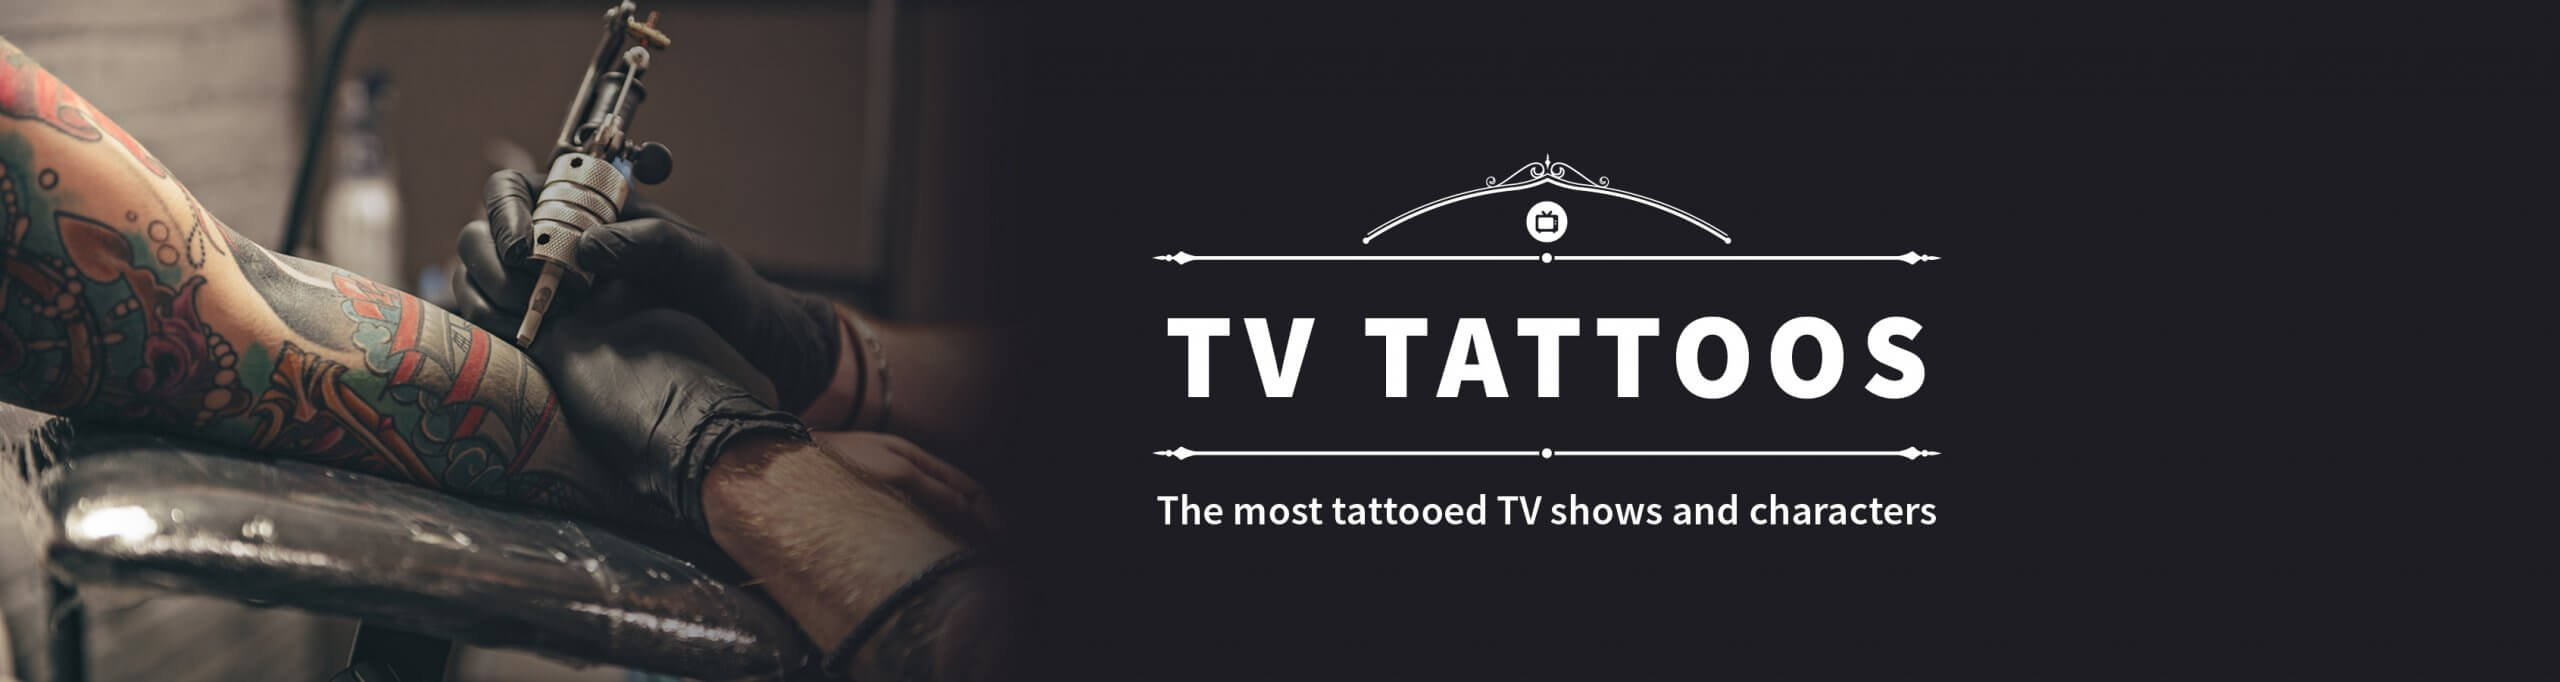 Most Tattooed TV Shows header banner